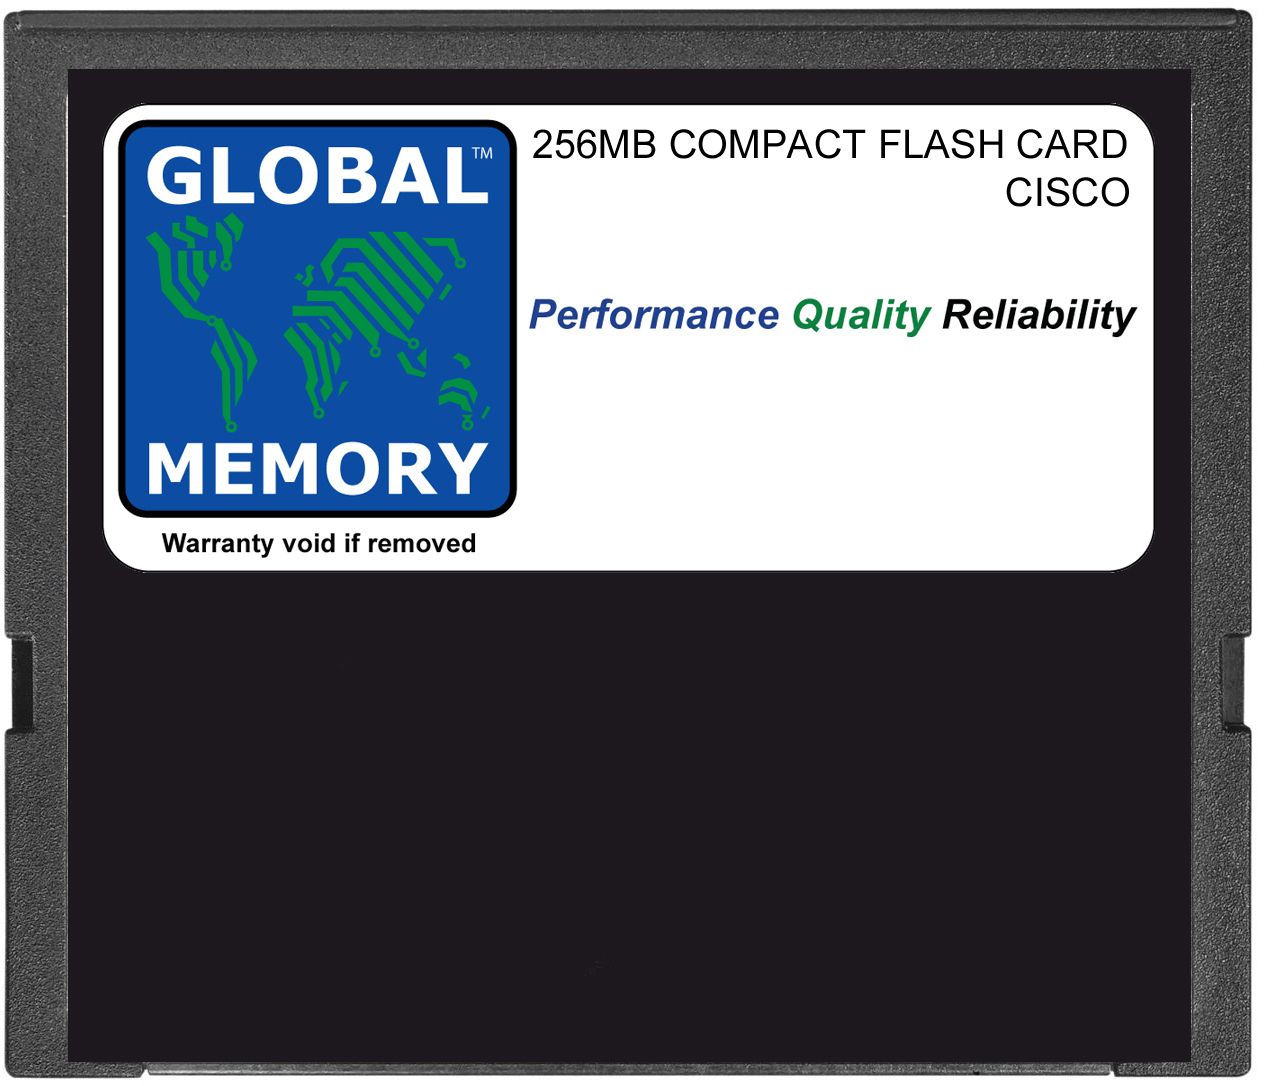 256MB COMPACT FLASH CARD MEMORY FOR CISCO RSP720-3C-GE / RSP720-3CXL-GE (MEM-RSP720-CF256M)